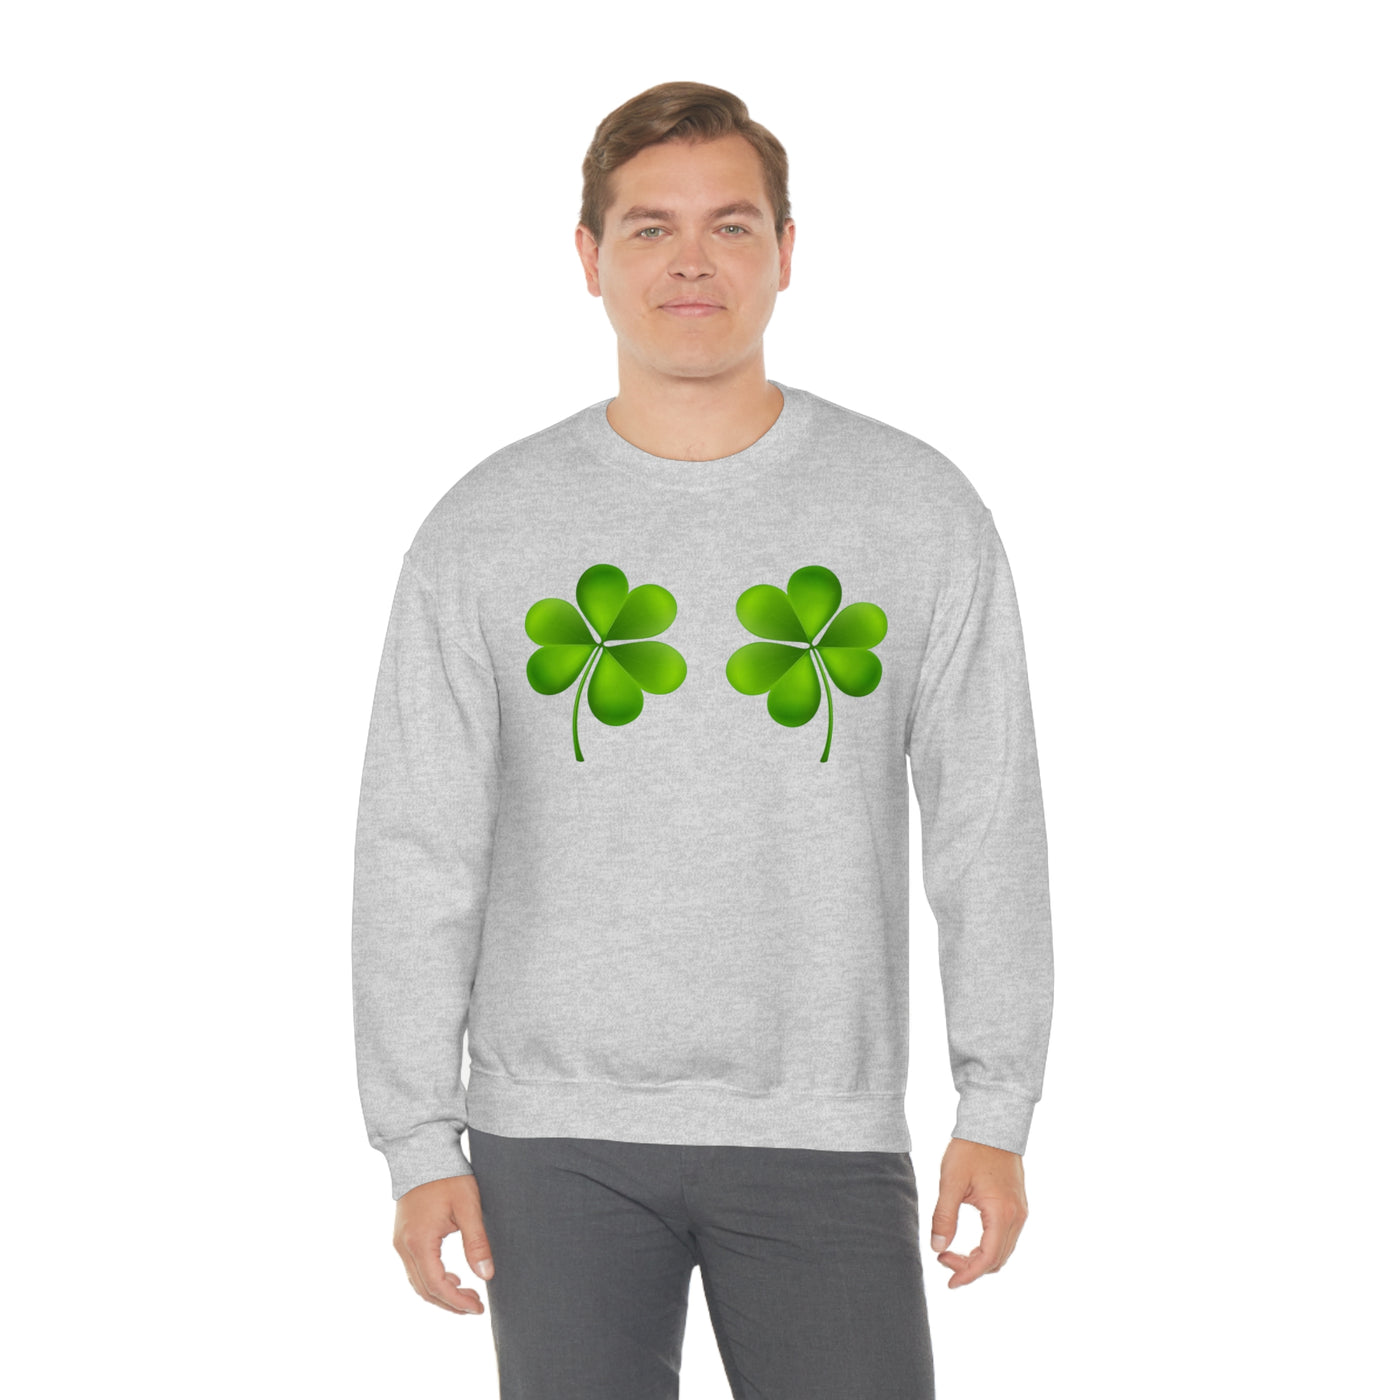 Lucky Bra Crewneck Sweatshirt